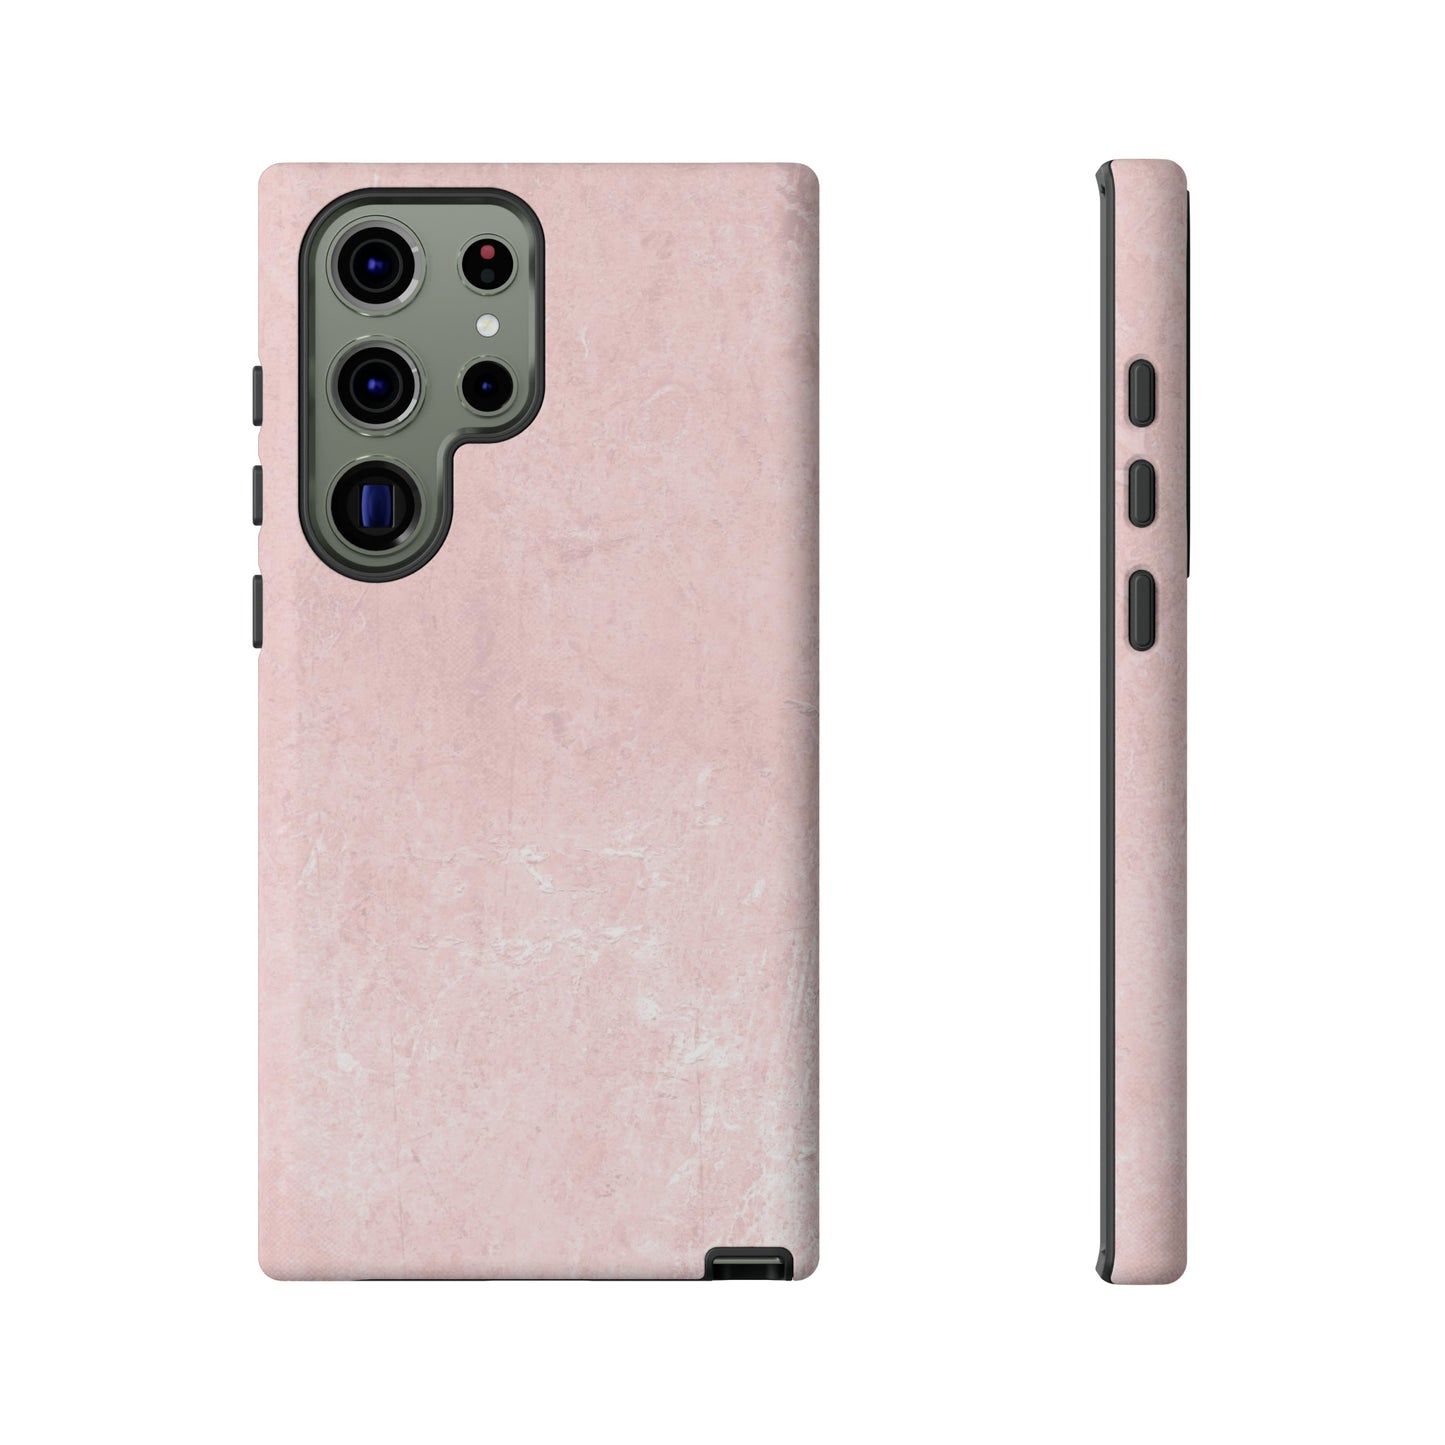 Pink Pastel Only / Samsung Case